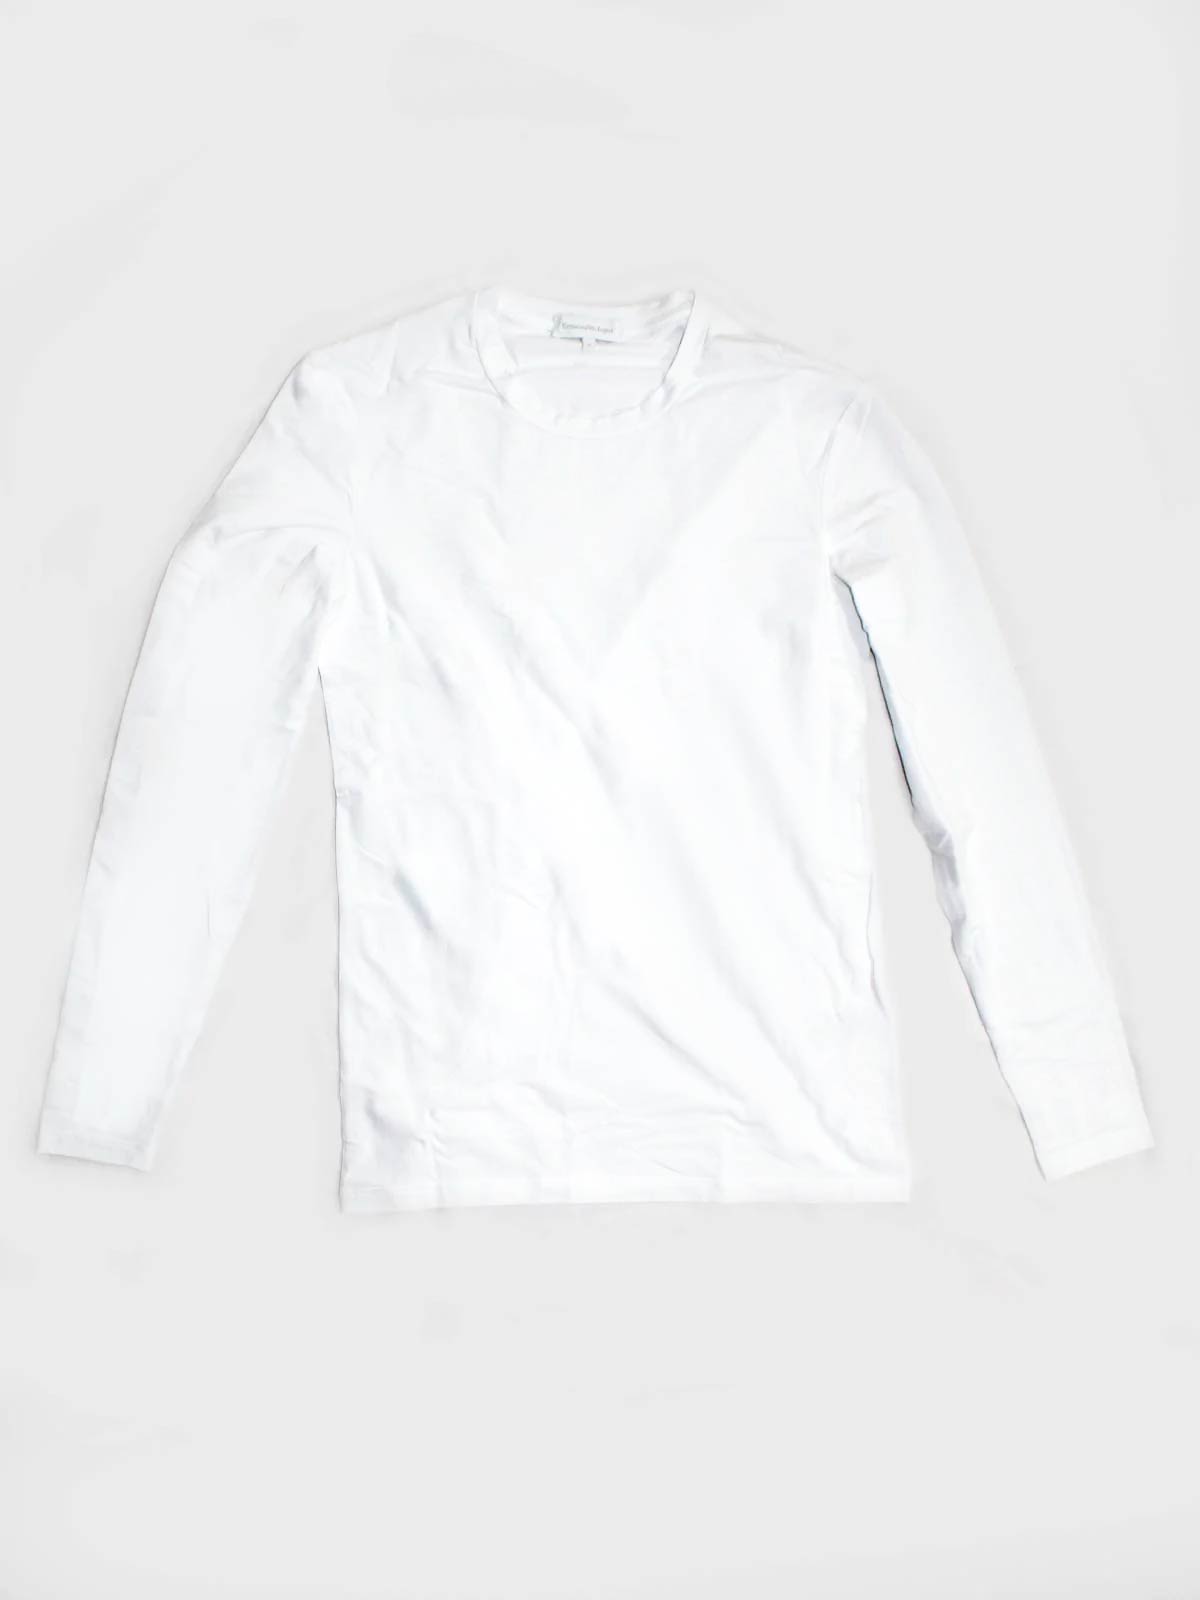 Ermenegildo Zegna Long Sleeve T-Shirt White